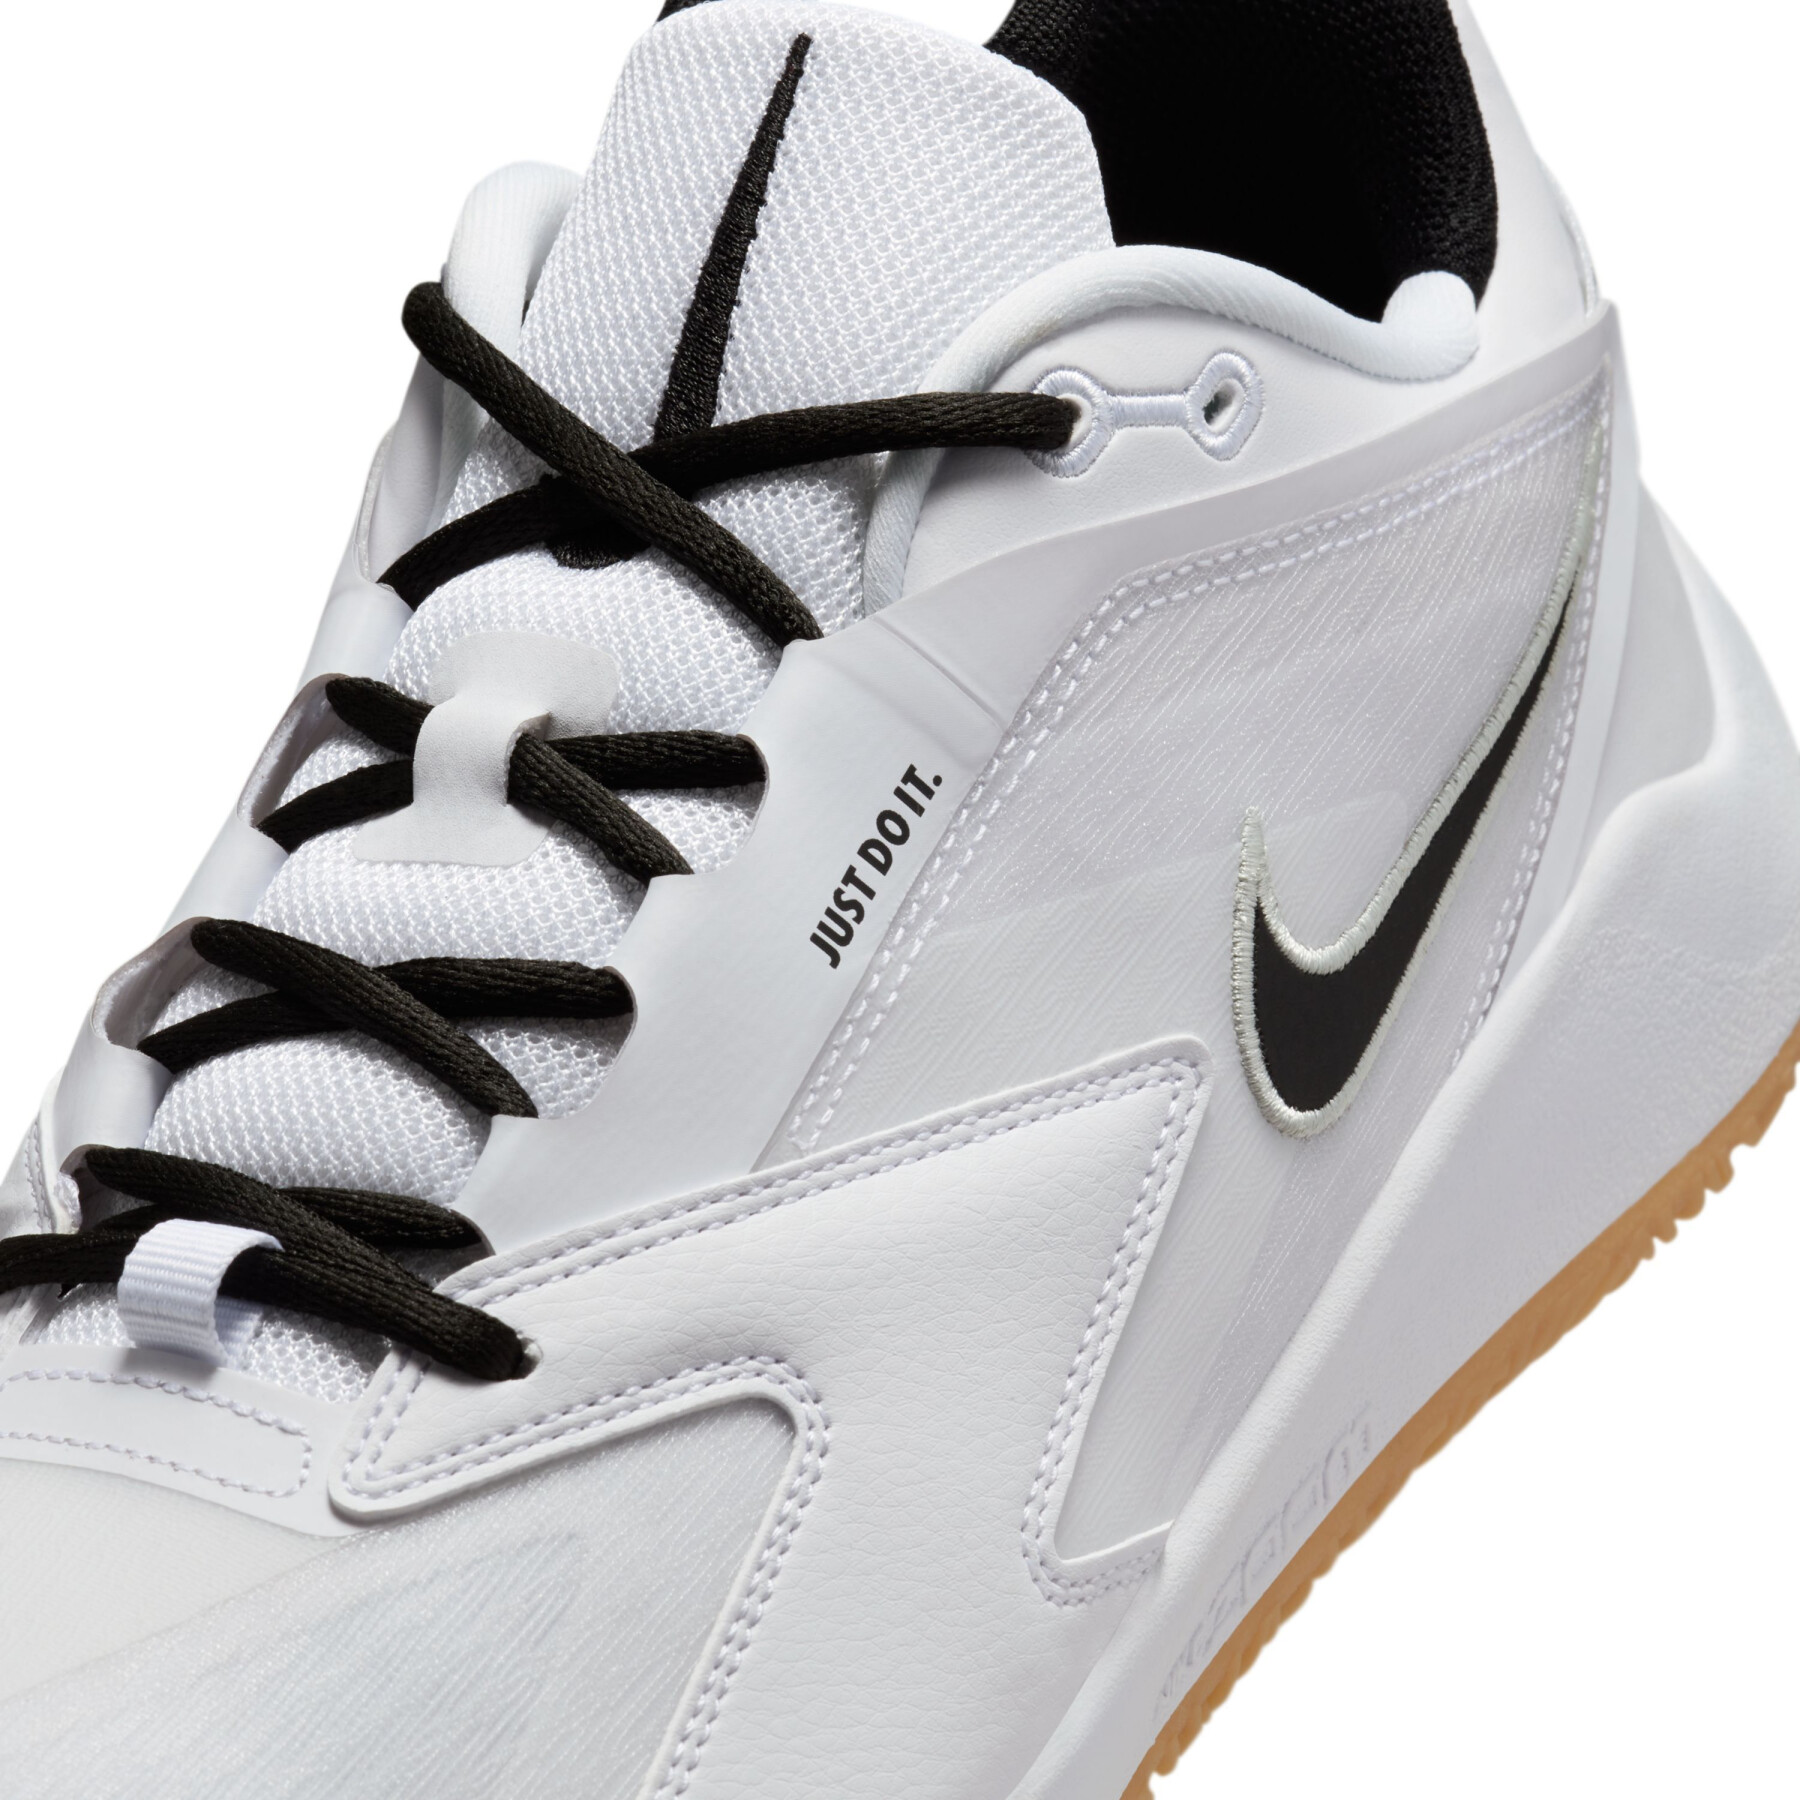 Scarpe pallavolo Nike Air Zoom Hyperace 3